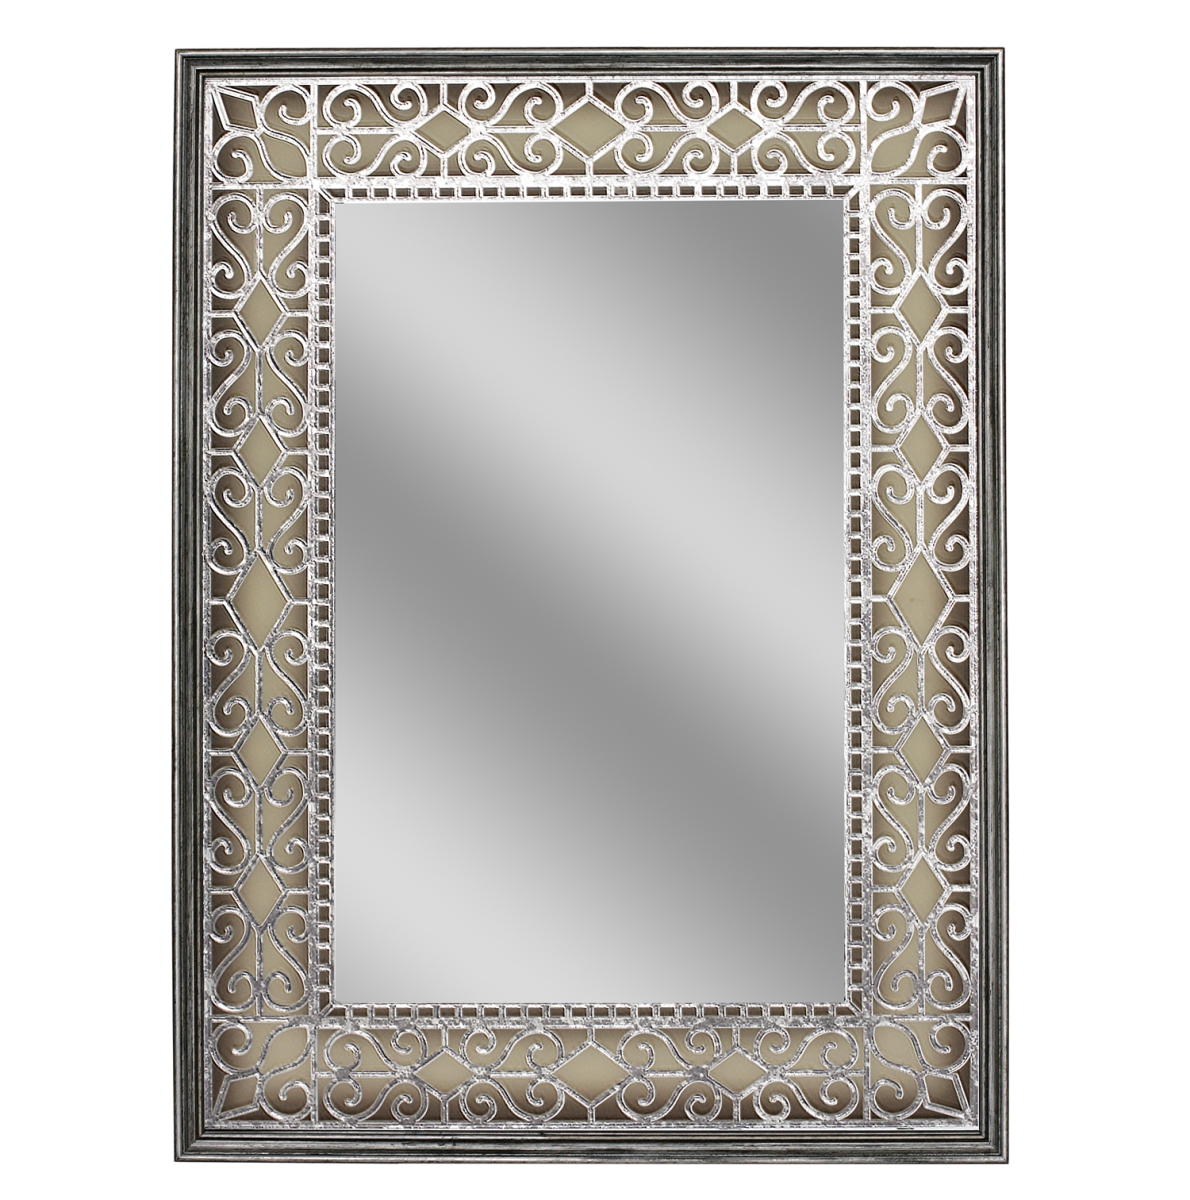 8421 23.5 X 31.5 In. Stain Glass Fretwork Mirror